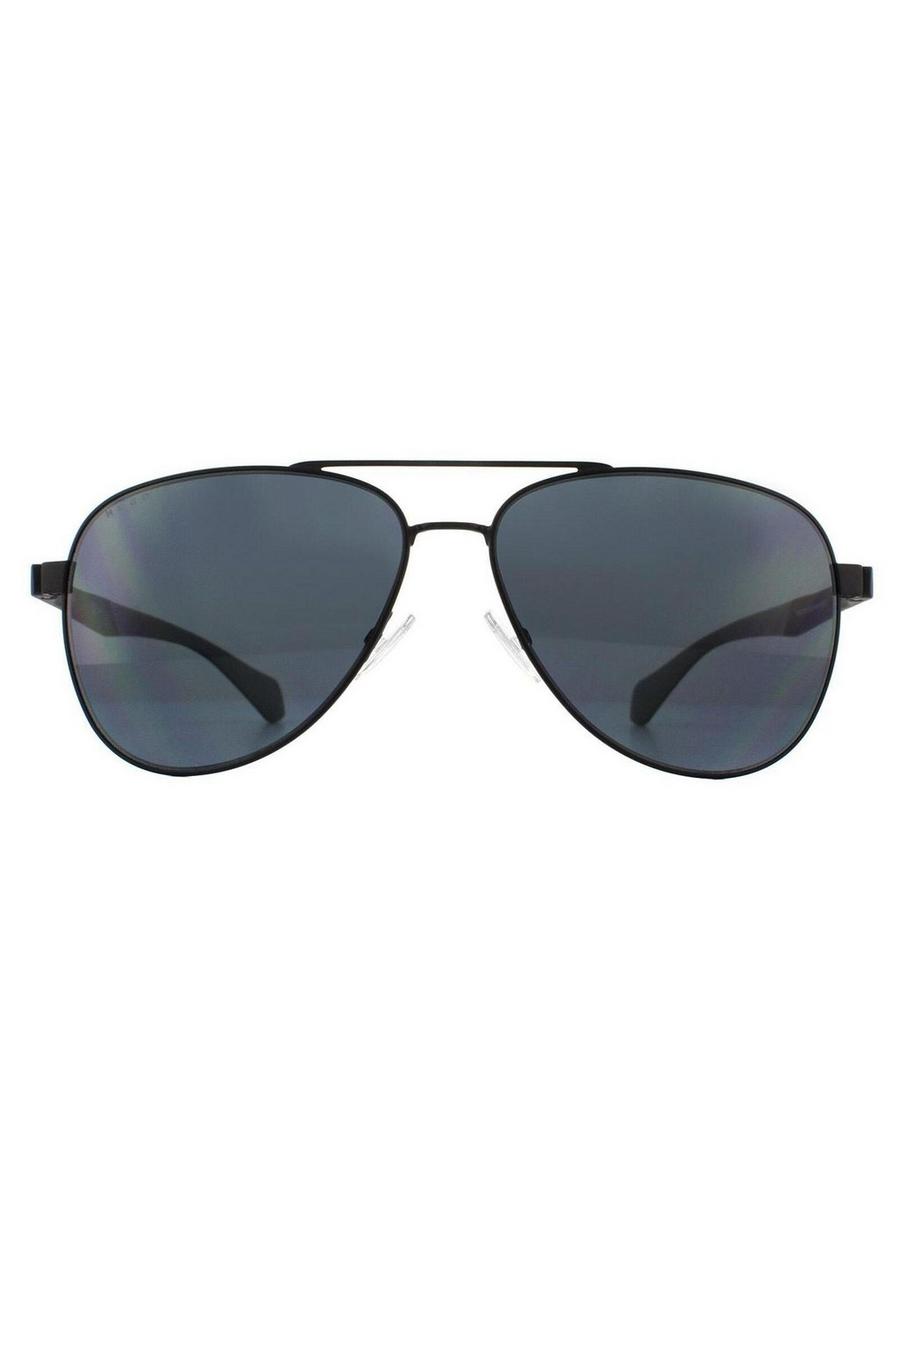 Aviator Matte Black Grey BOSS 1077/S Sunglasses